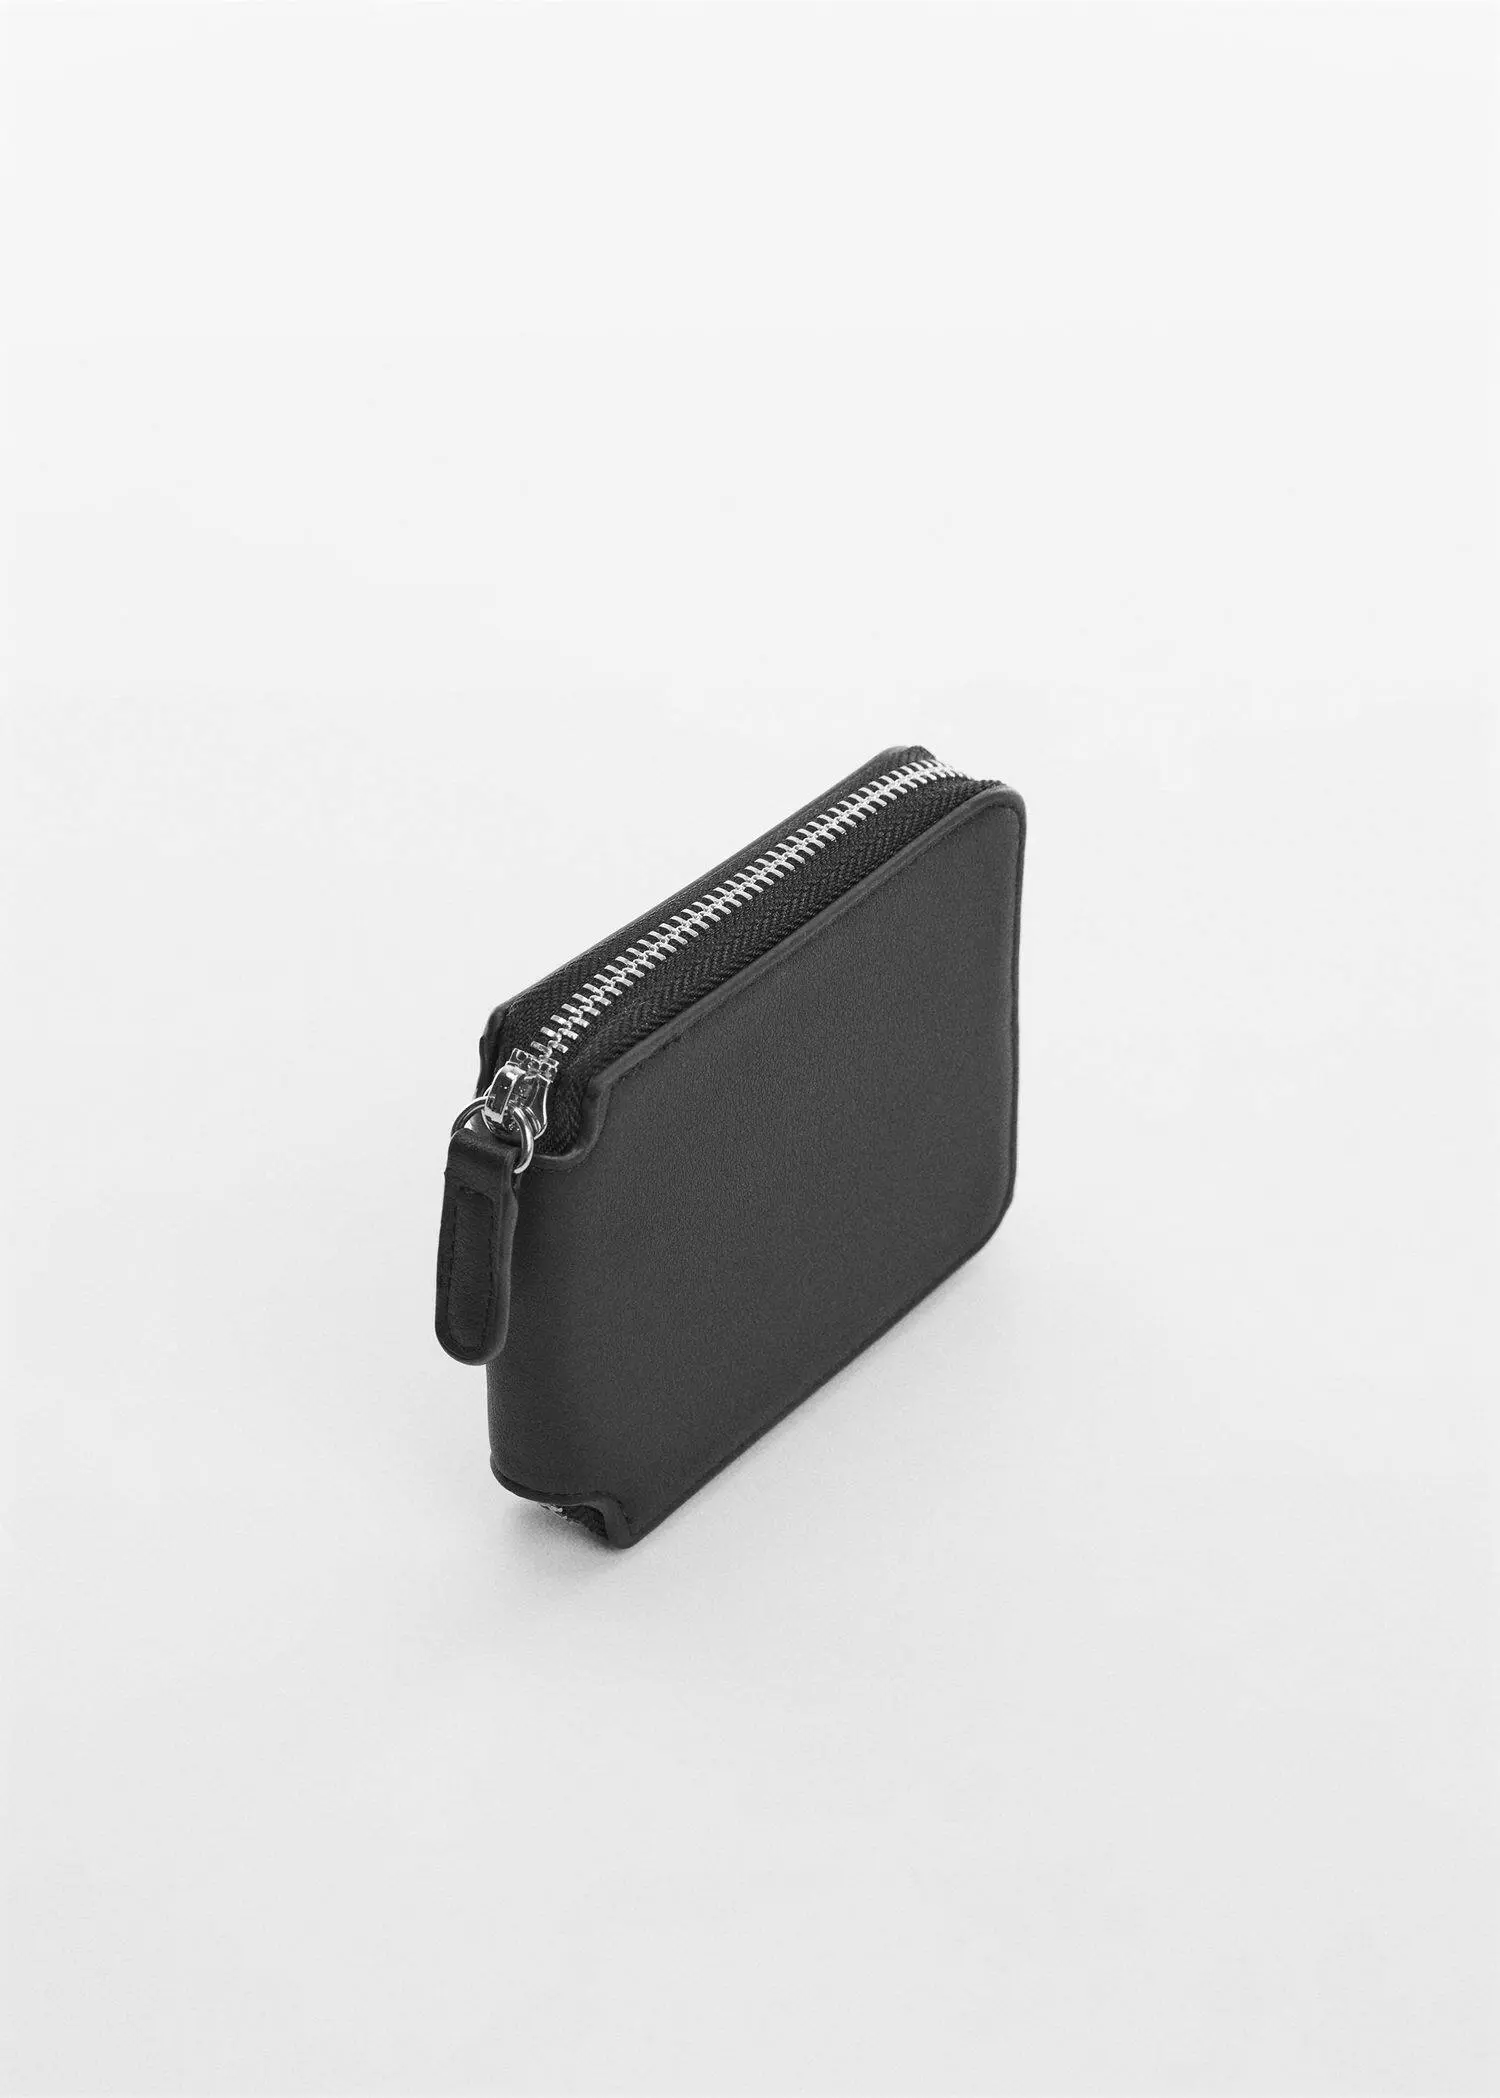 Mango Anti-contactless card holder wallet. 2